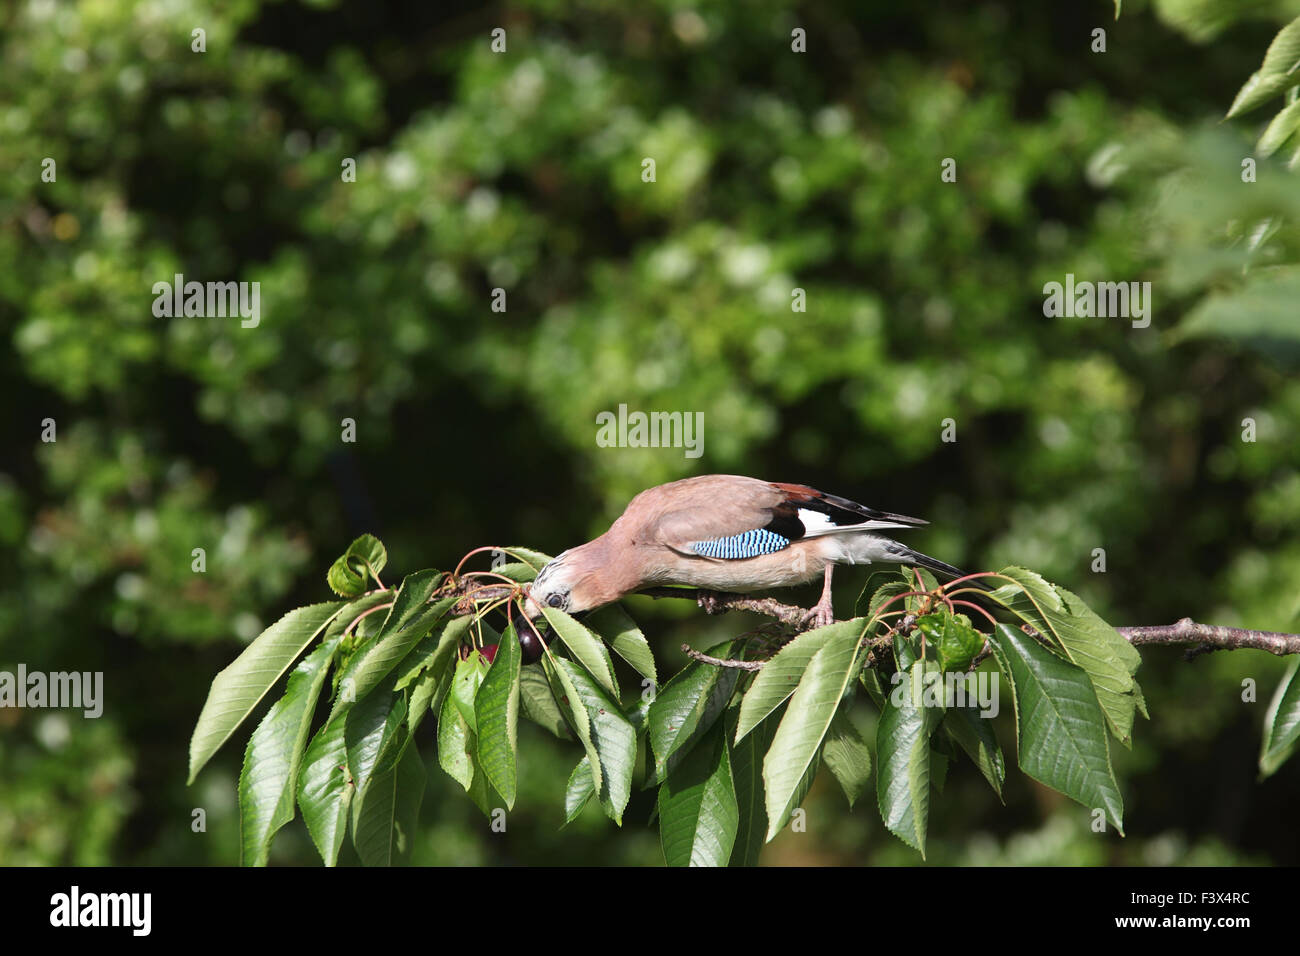 Jay Garrulus glandiarius Taking cherry from tree Carmarthenshire June 2015 Stock Photo